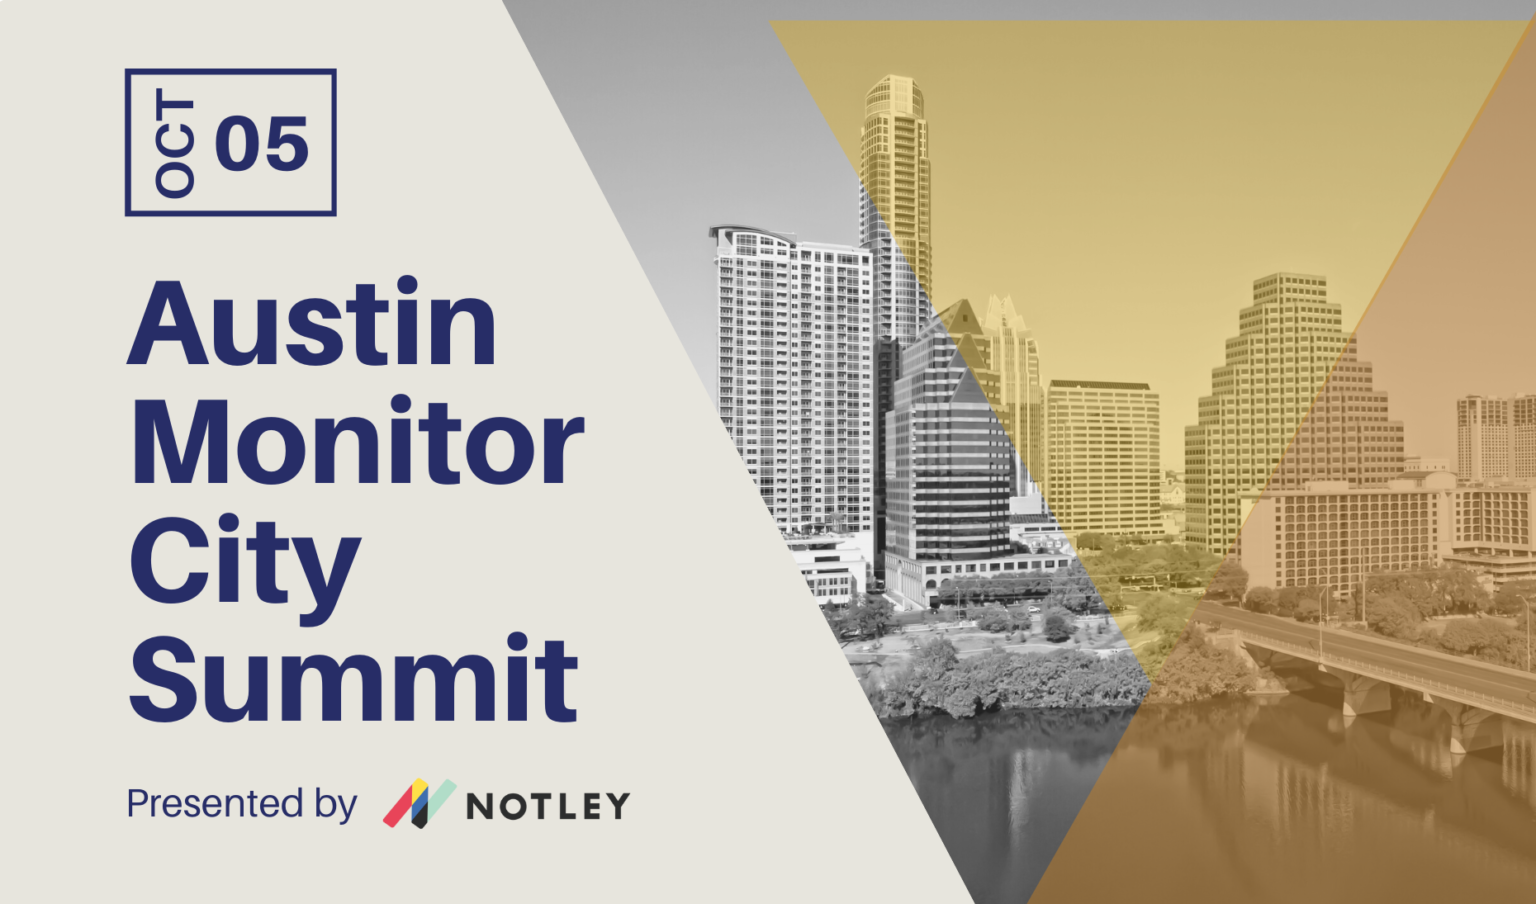 Austin Monitor City Summit